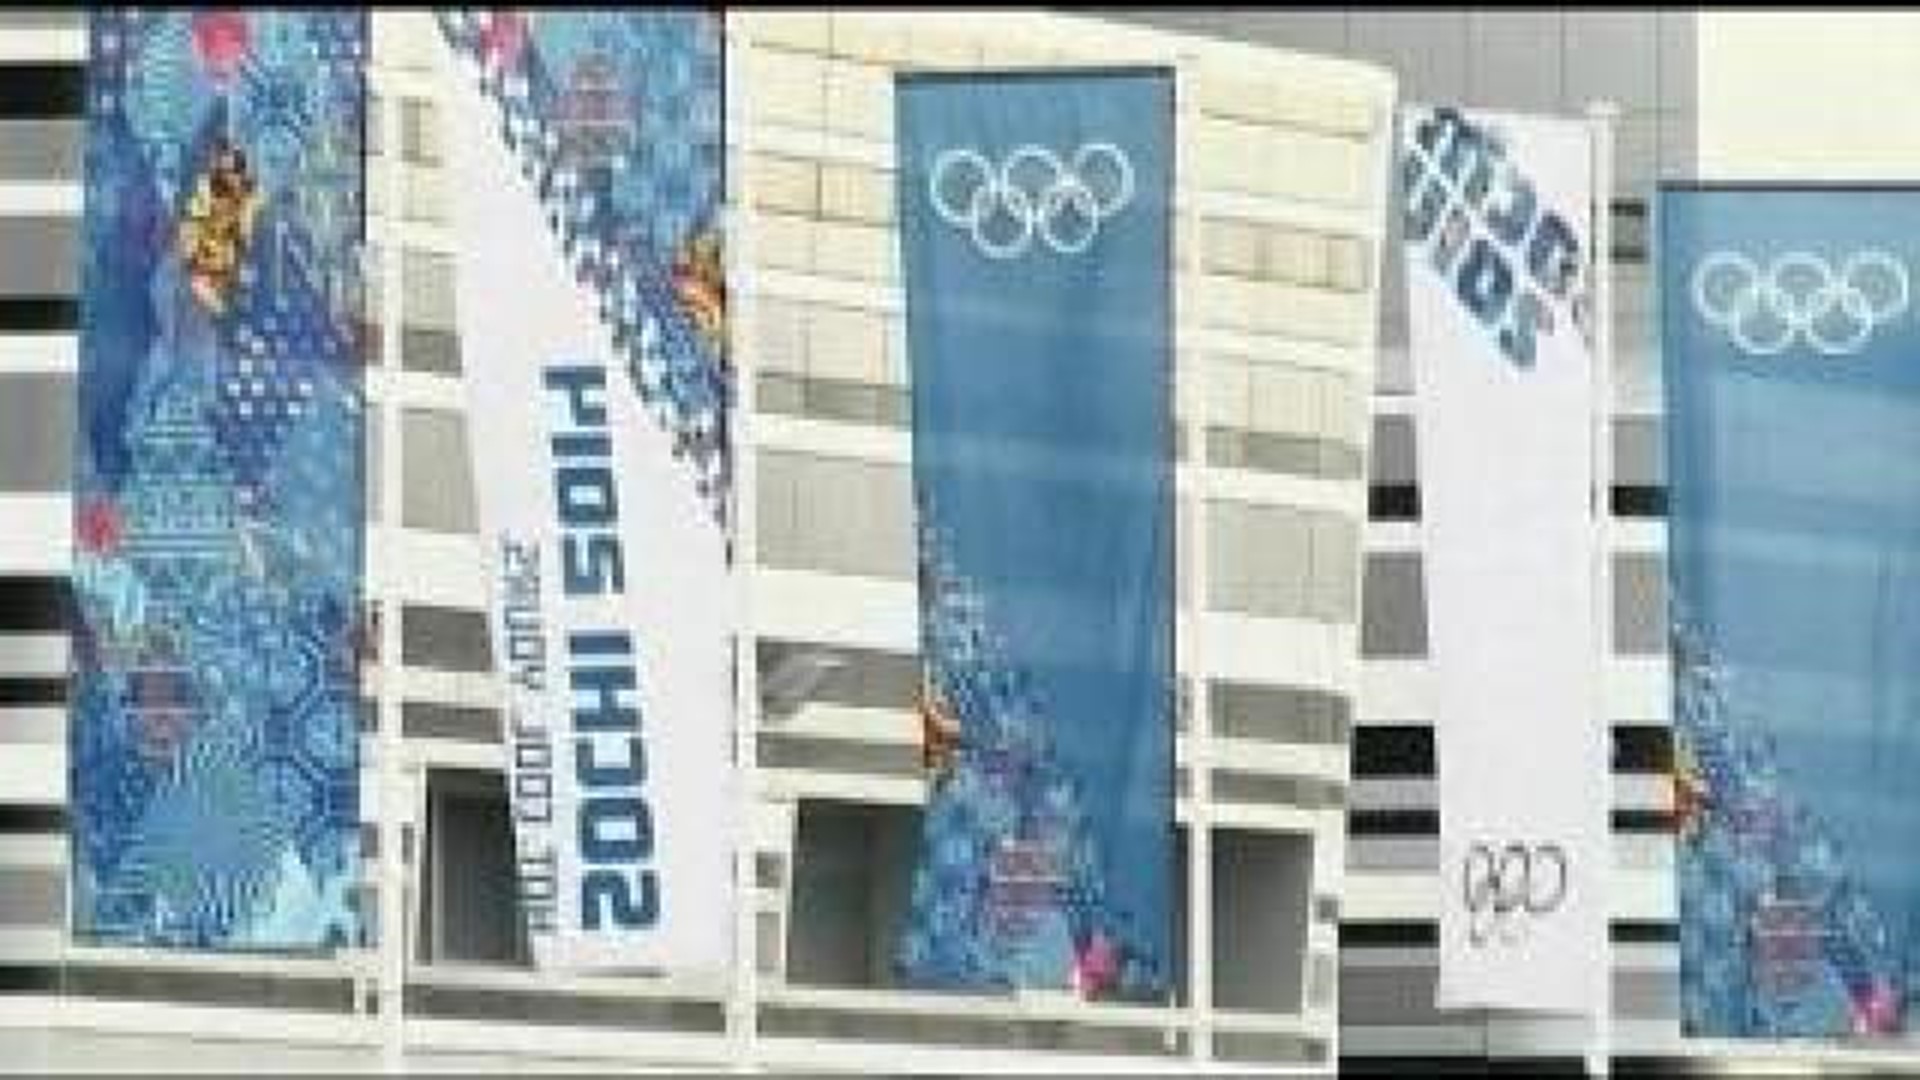 Security precautions taken for Sochi Olympics